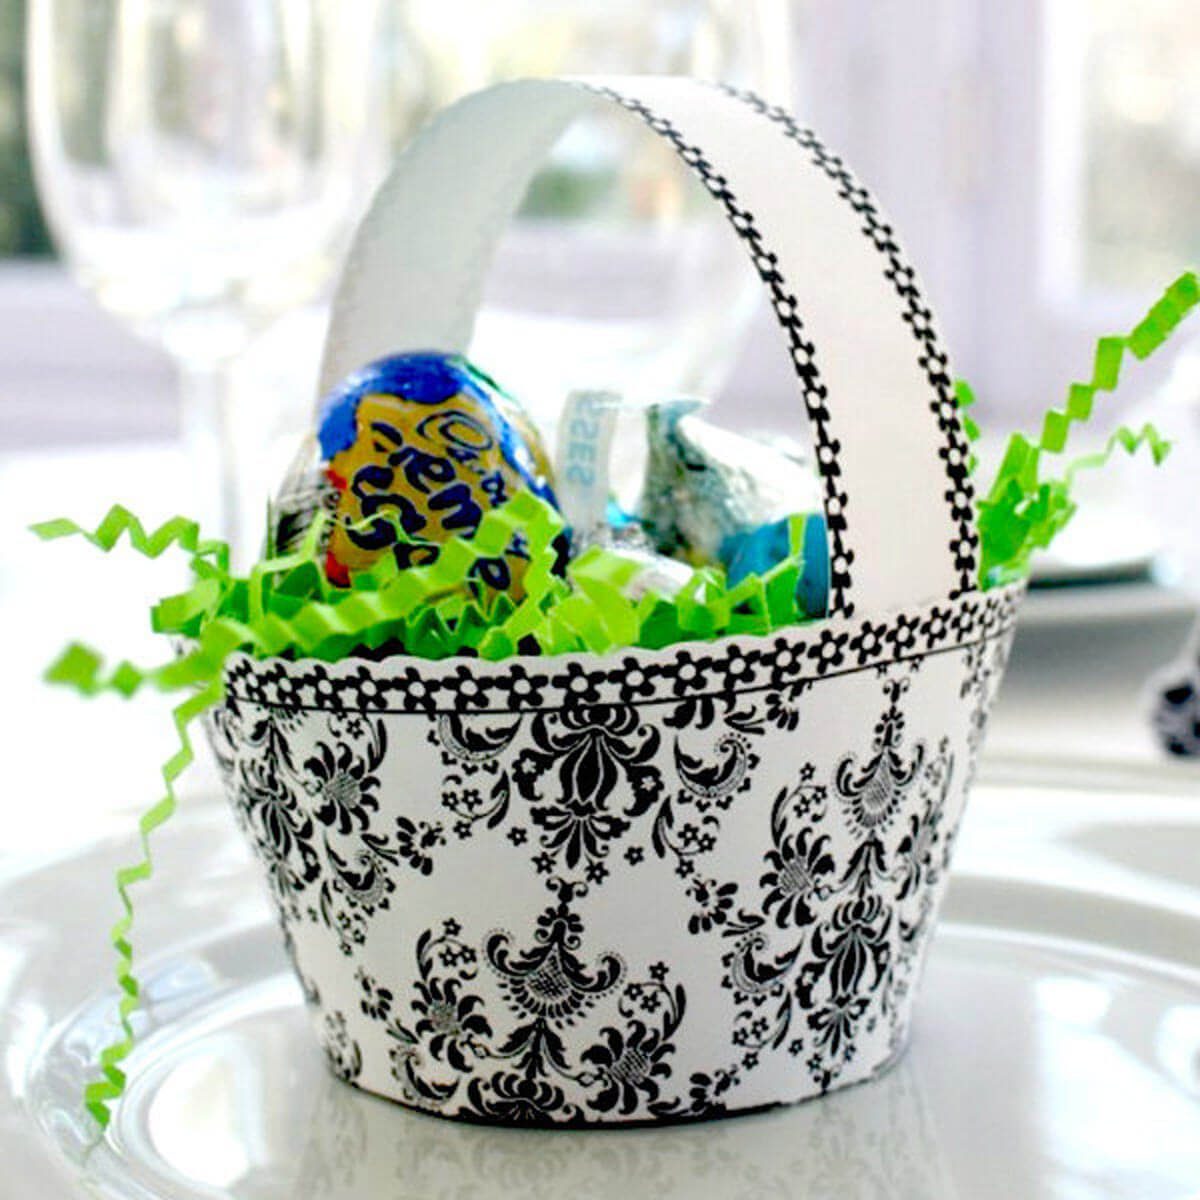 Woven Ribbon Easter Basket DIY Tutorial - Lia Griffith